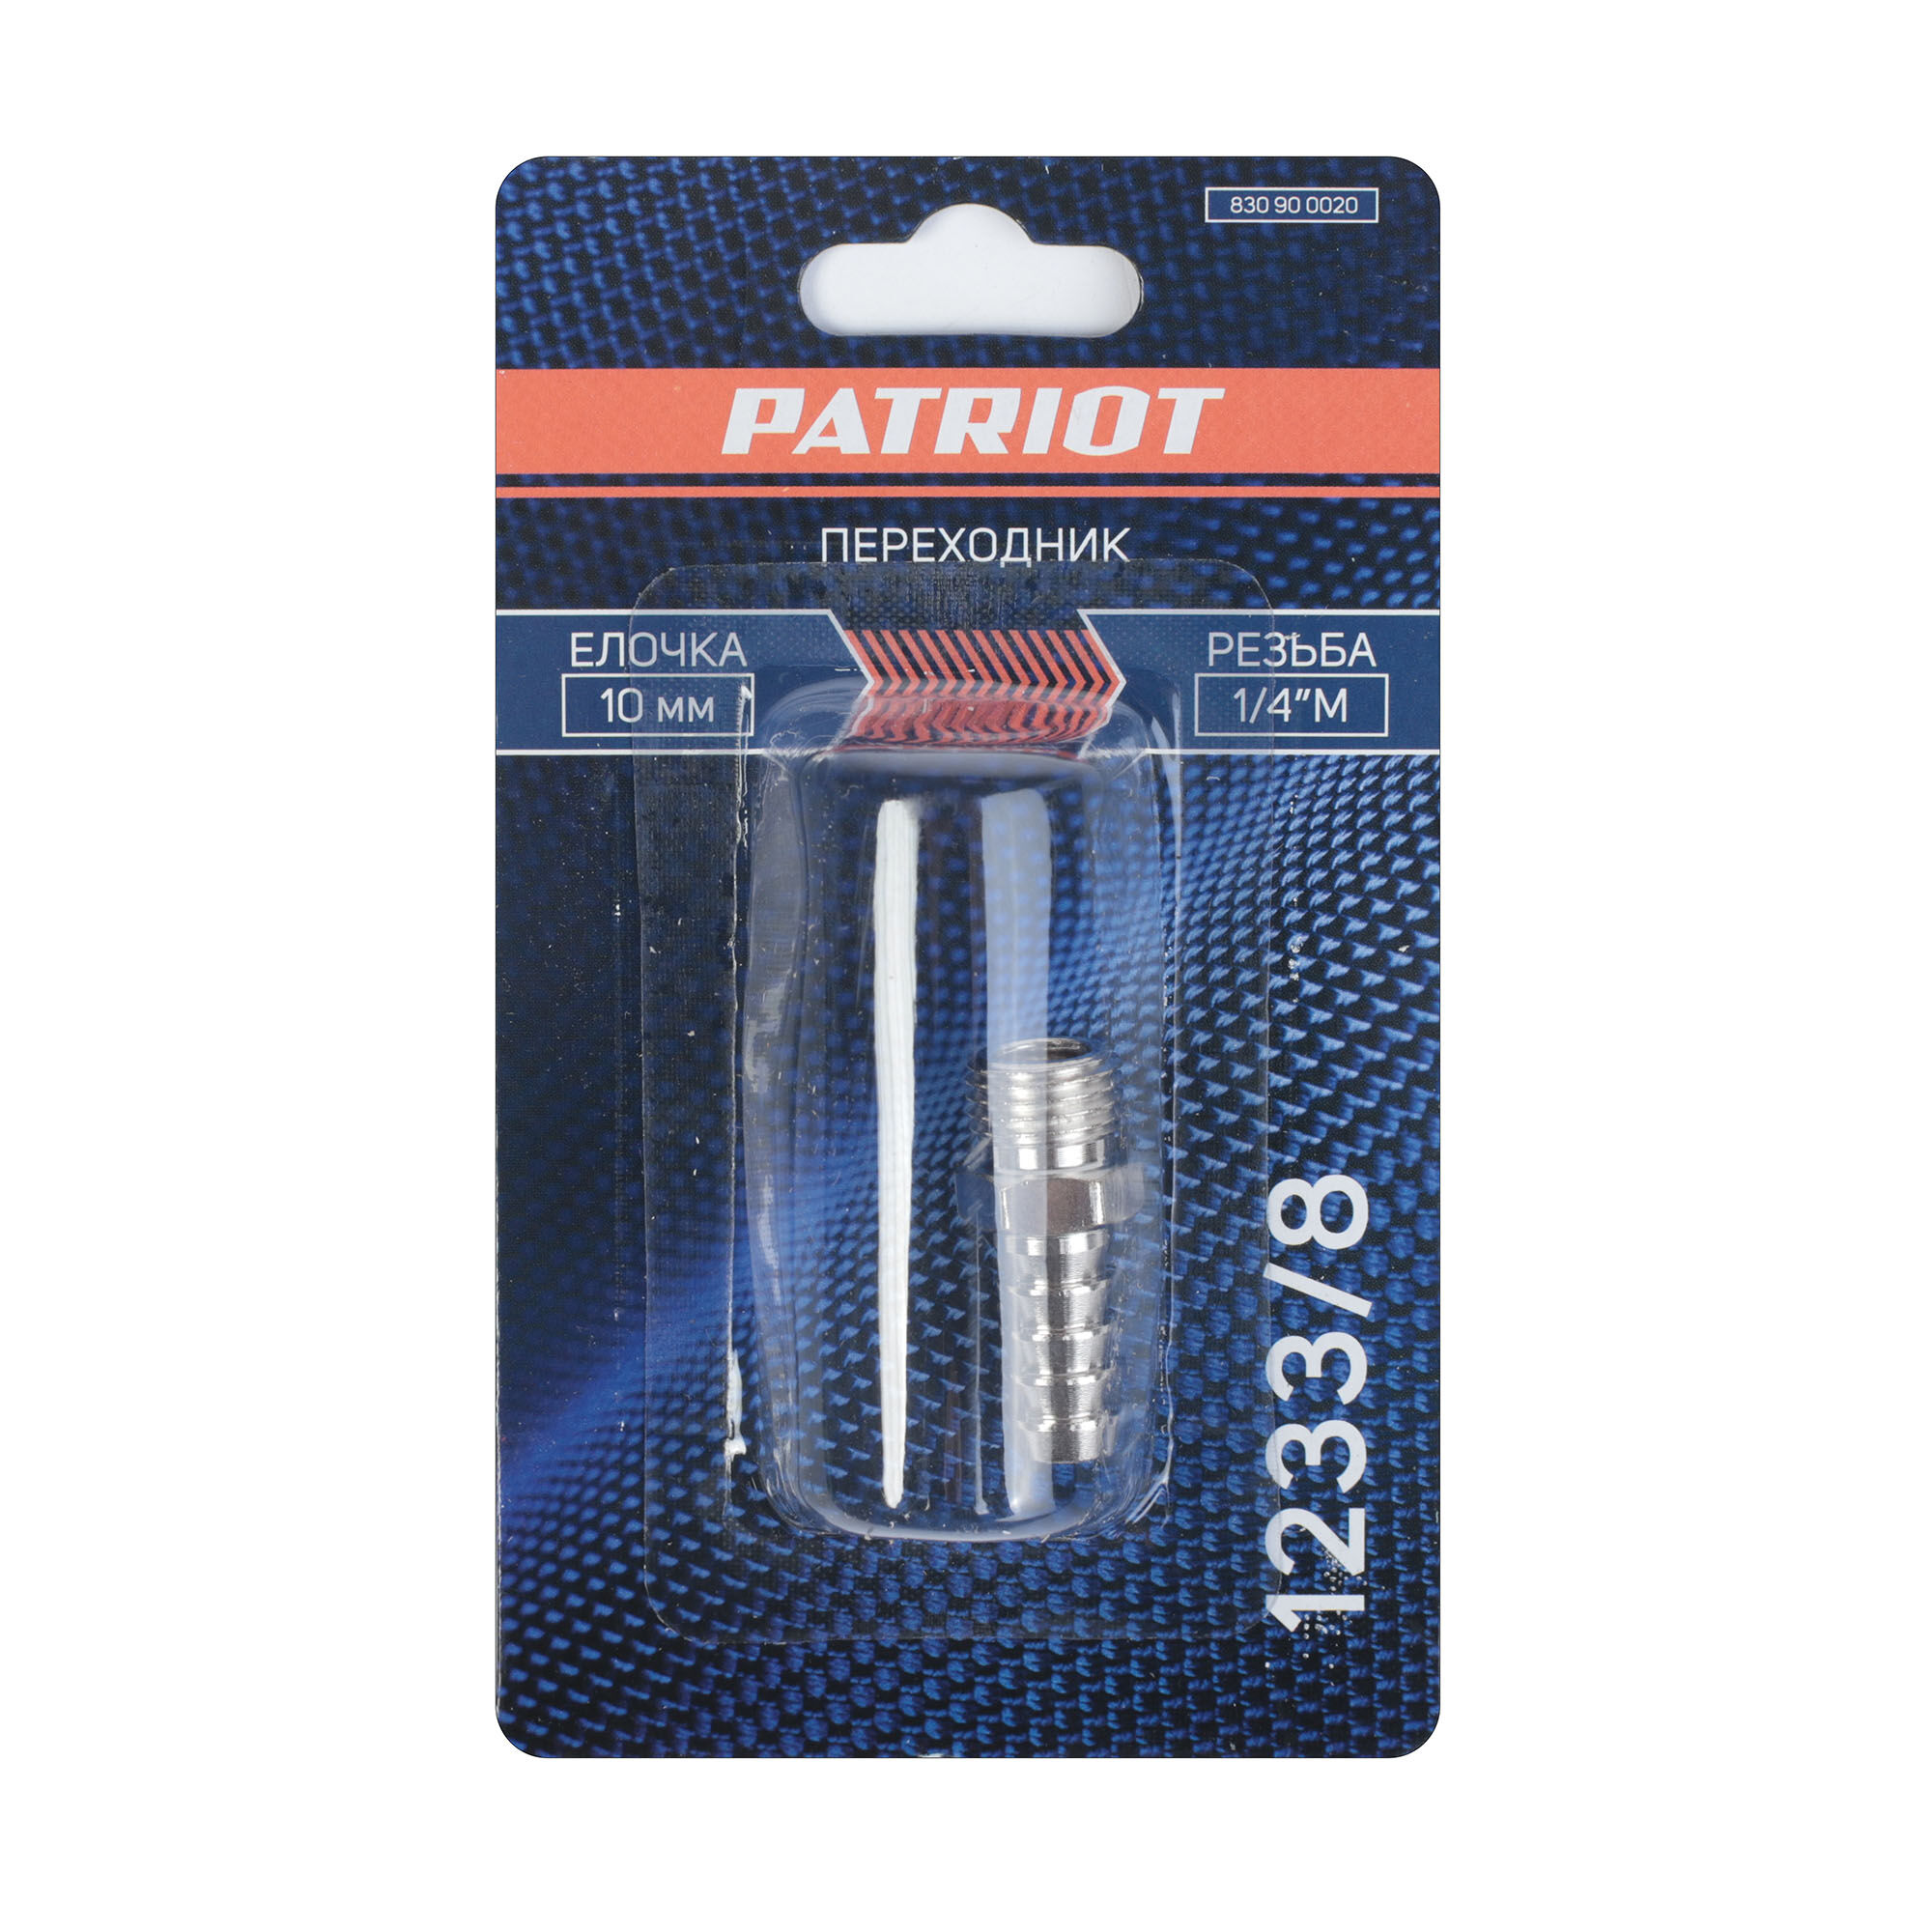 Переходник Patriot 1233/8 (елочка 10 мм - 1/4quot; М) 5